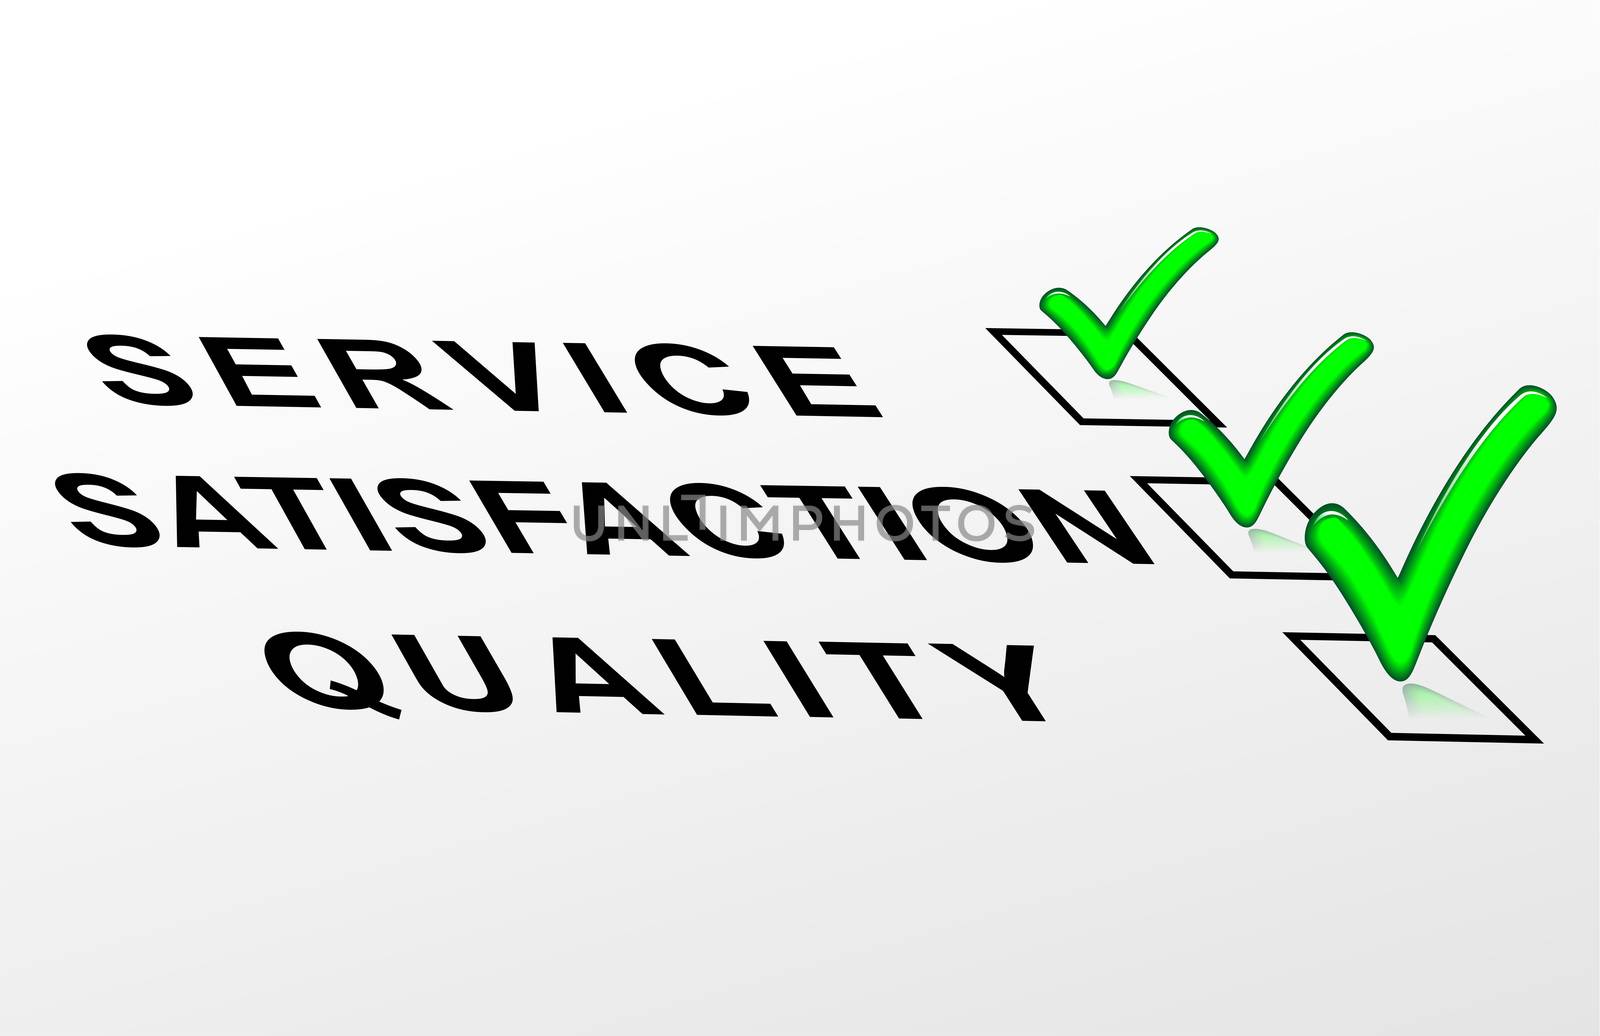 Label quality,satisfaction,service by nickylarson974